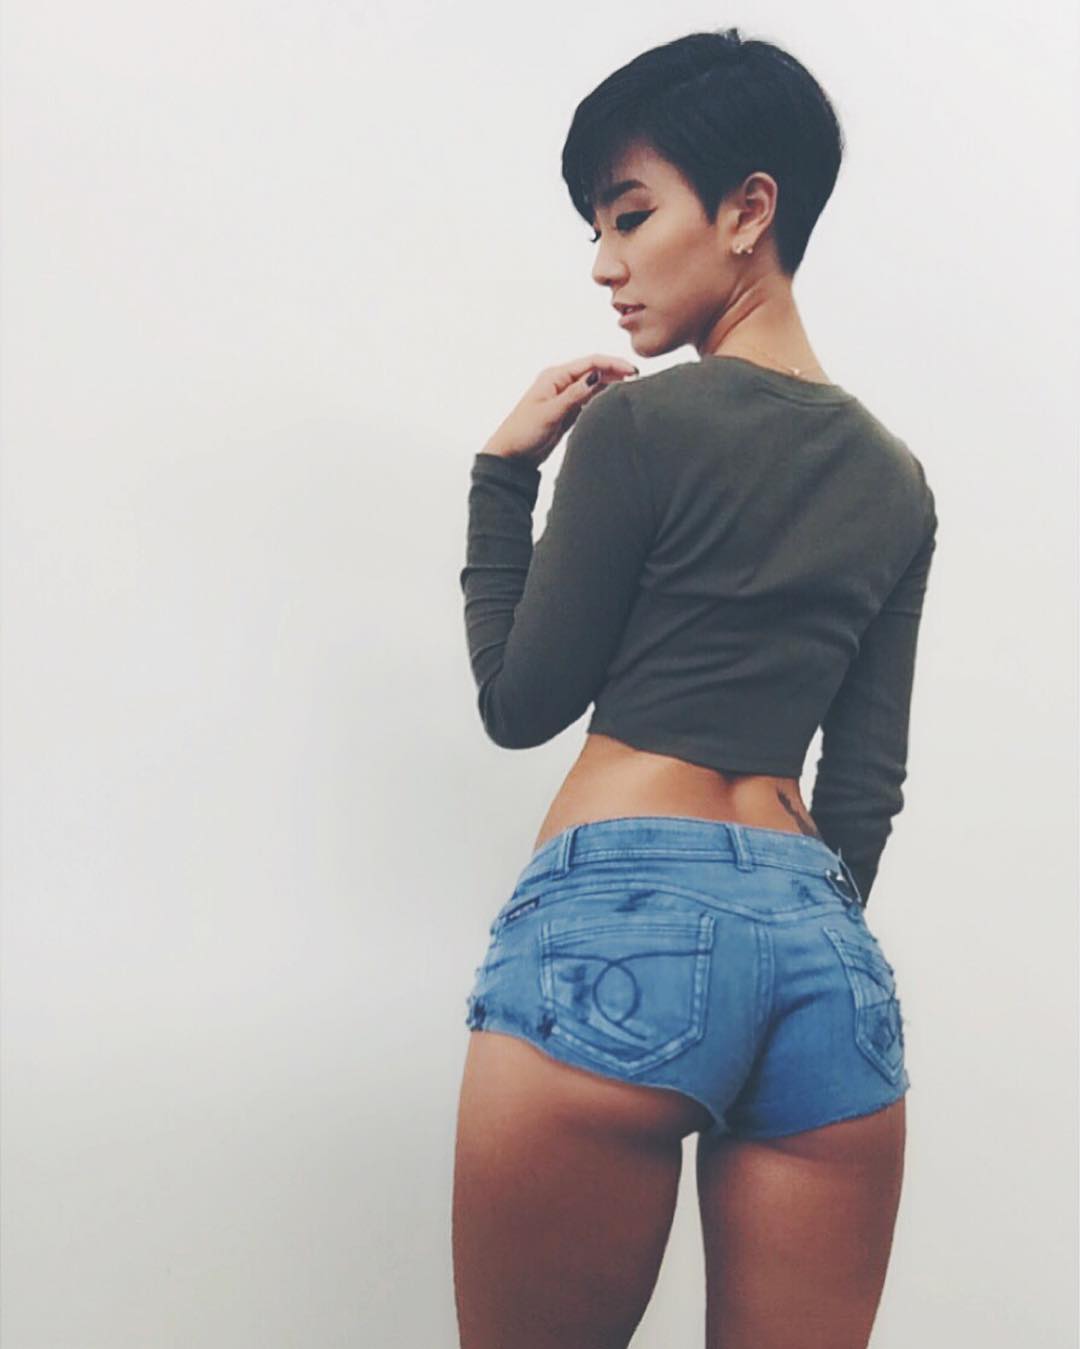 Booty shorts asian